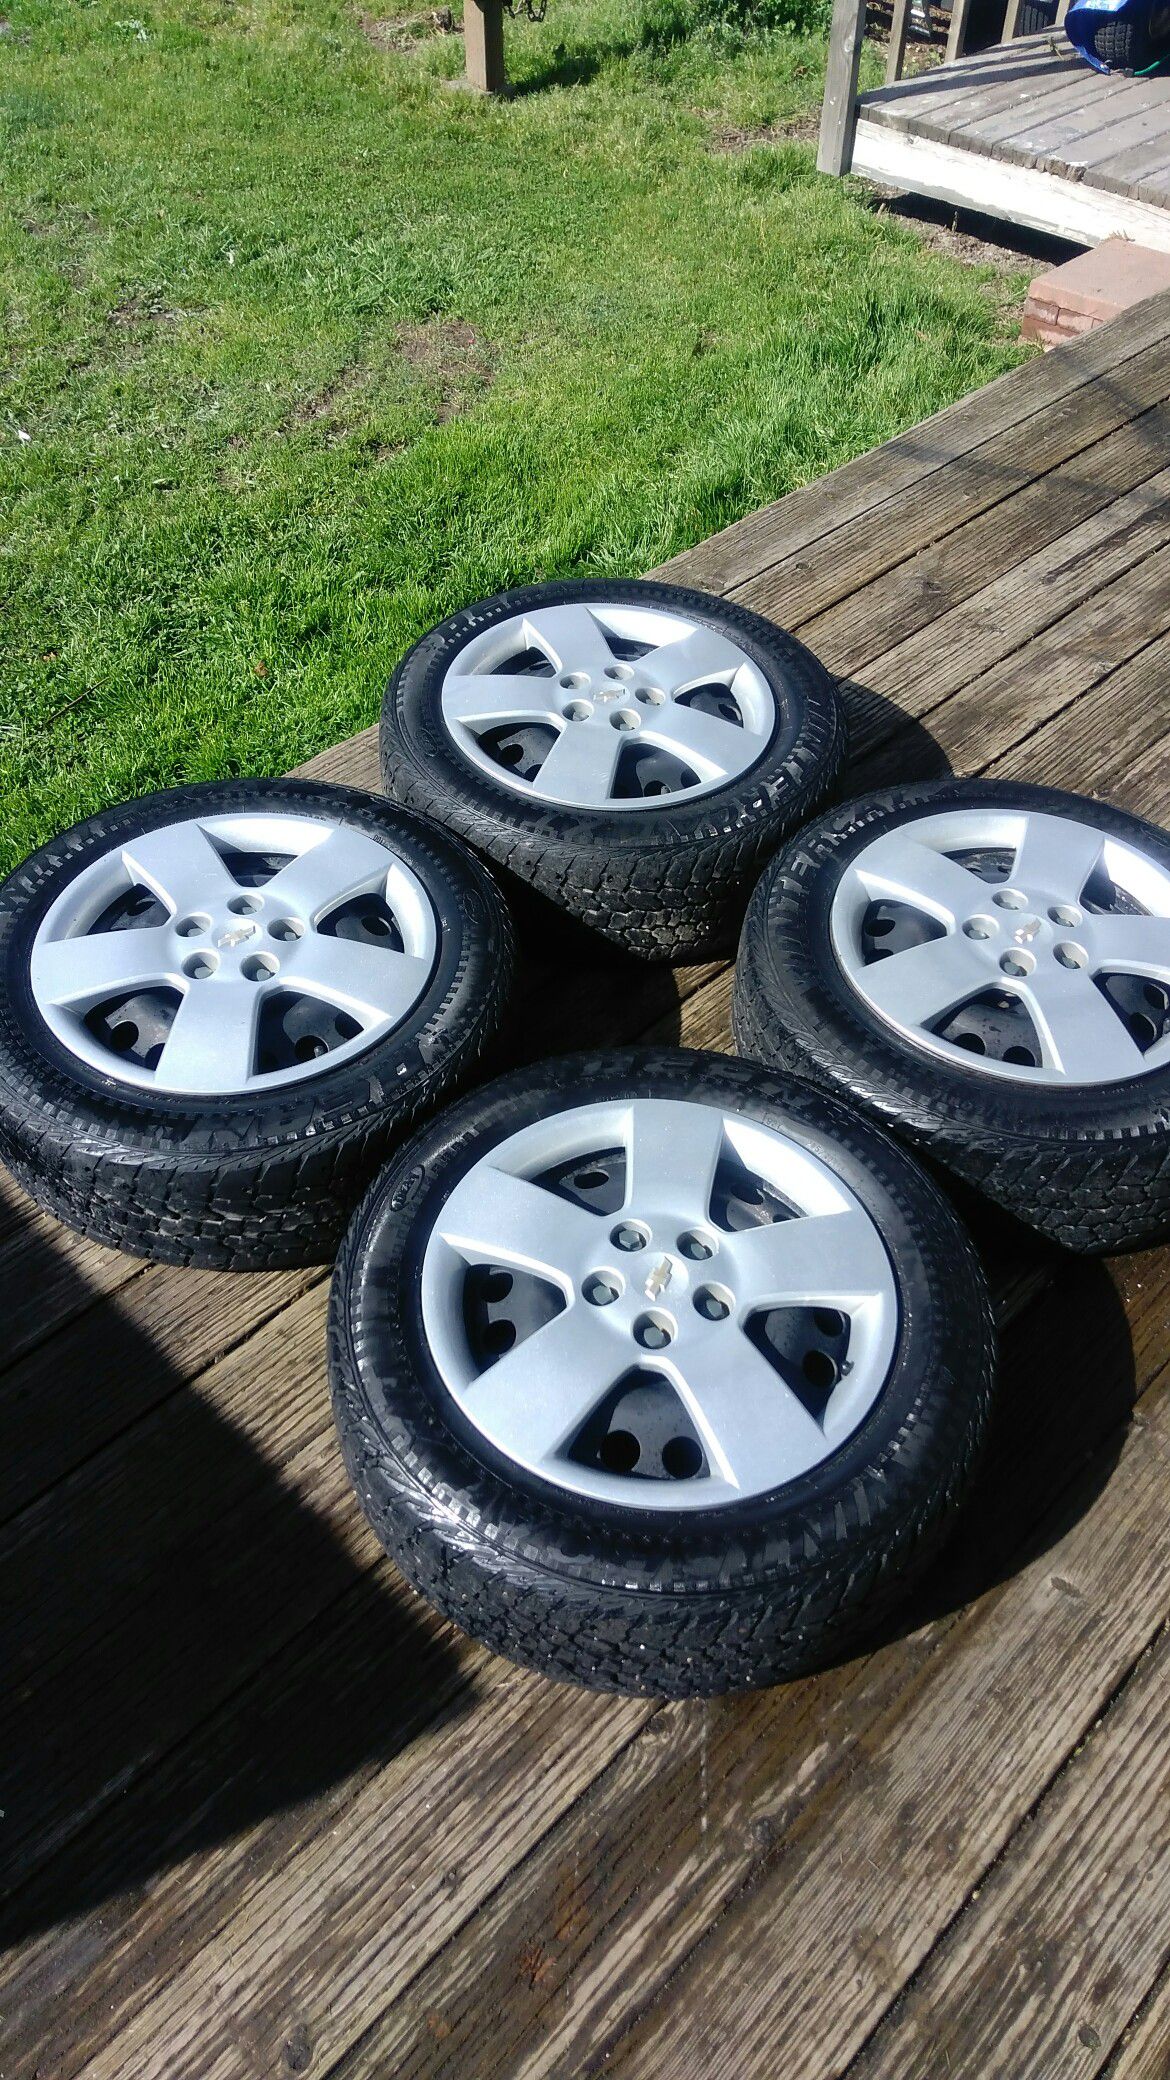 (4) 205/60R16 Tires & Steel Wheels (Matching set of 4)